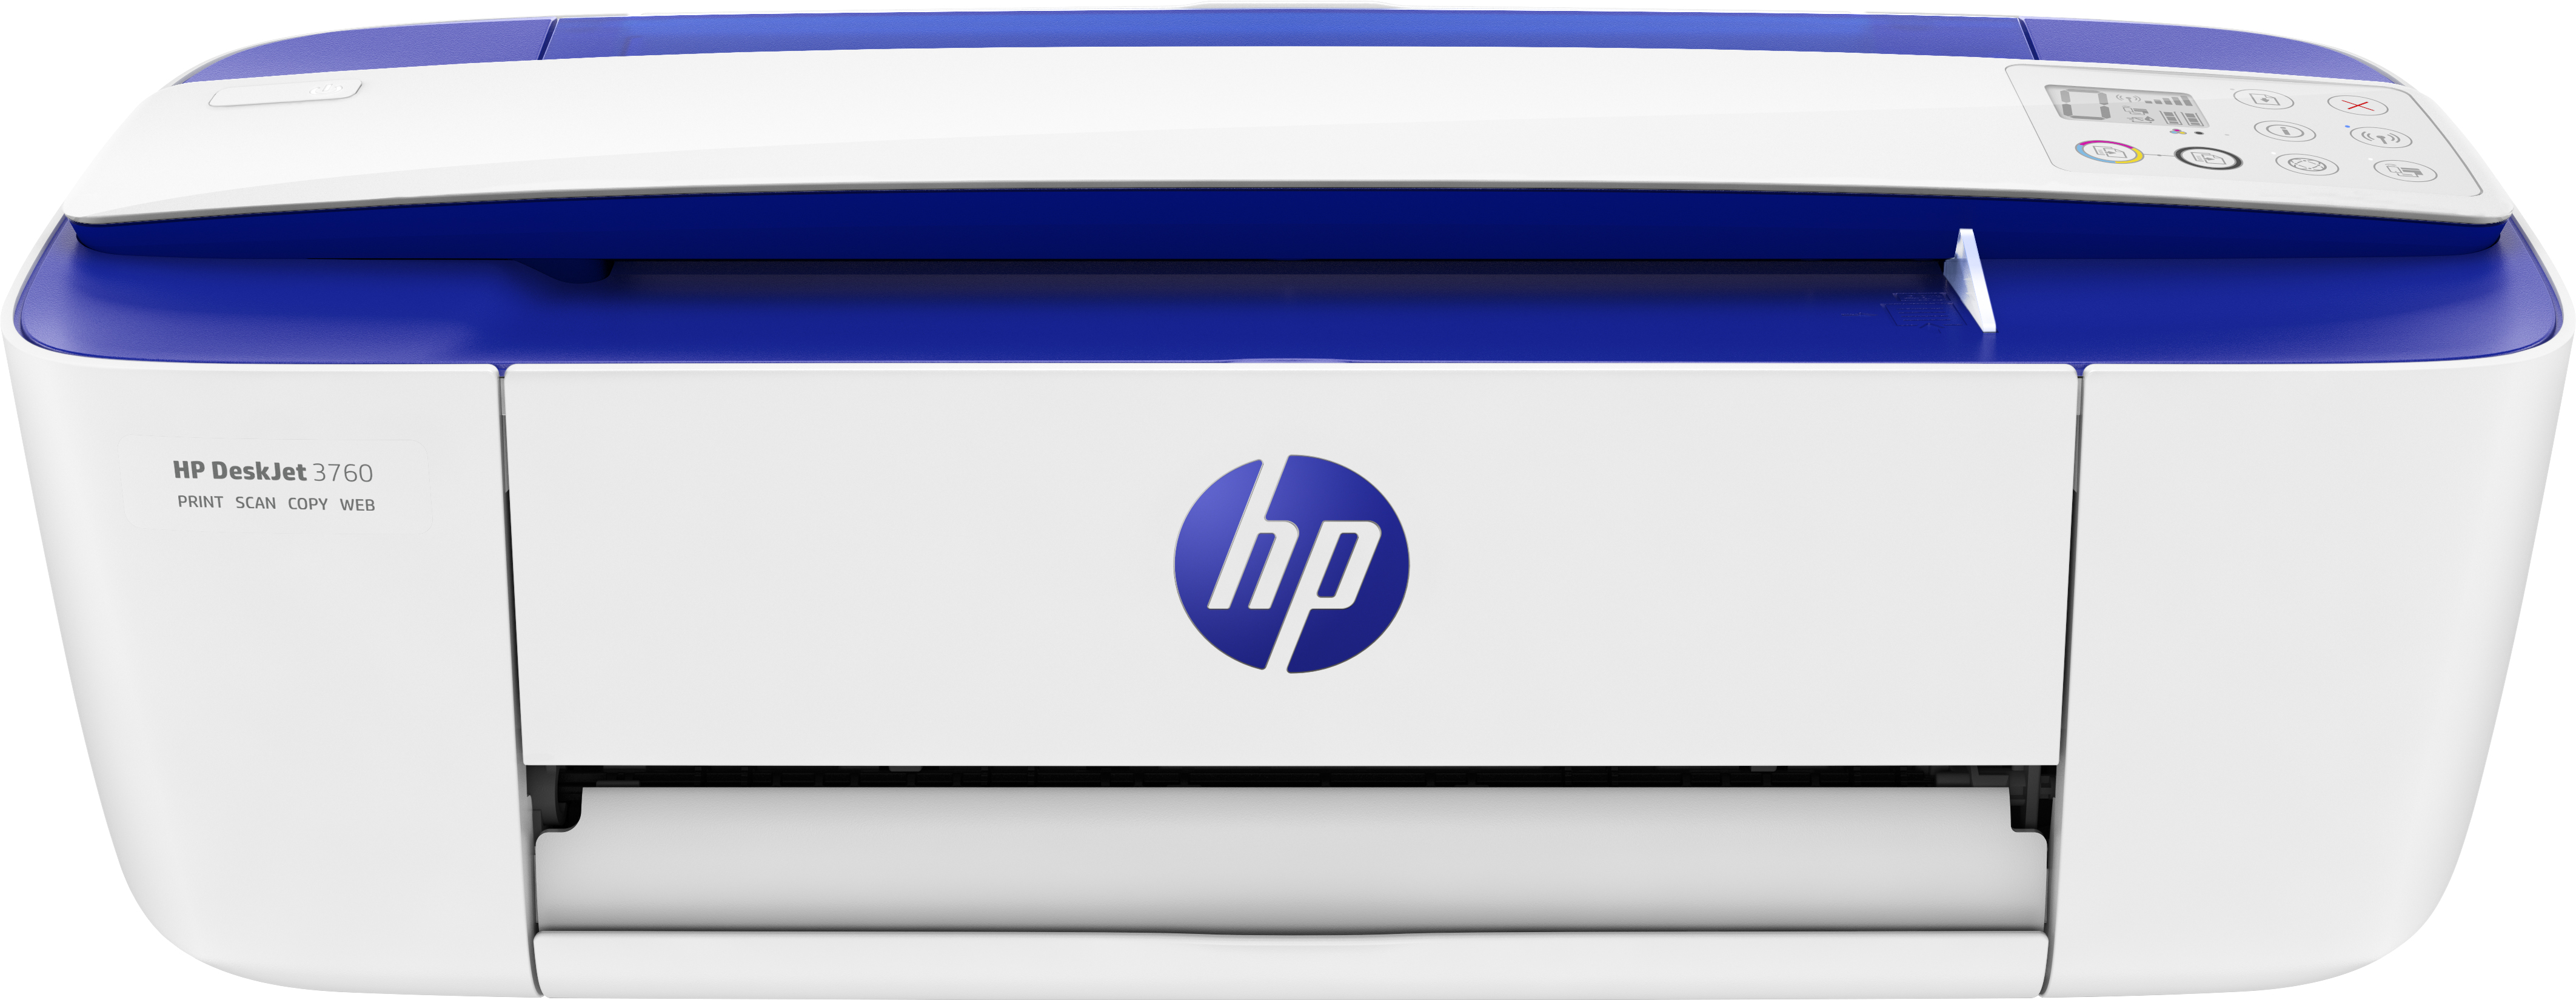 Image of HP DeskJet Stampante multifunzione 3760, Colore, Stampante per Casa, Stampa, copia, scansione, wireless, wireless; idonea a Instant Ink; stampa da smartphone o tablet; scansione verso PDF